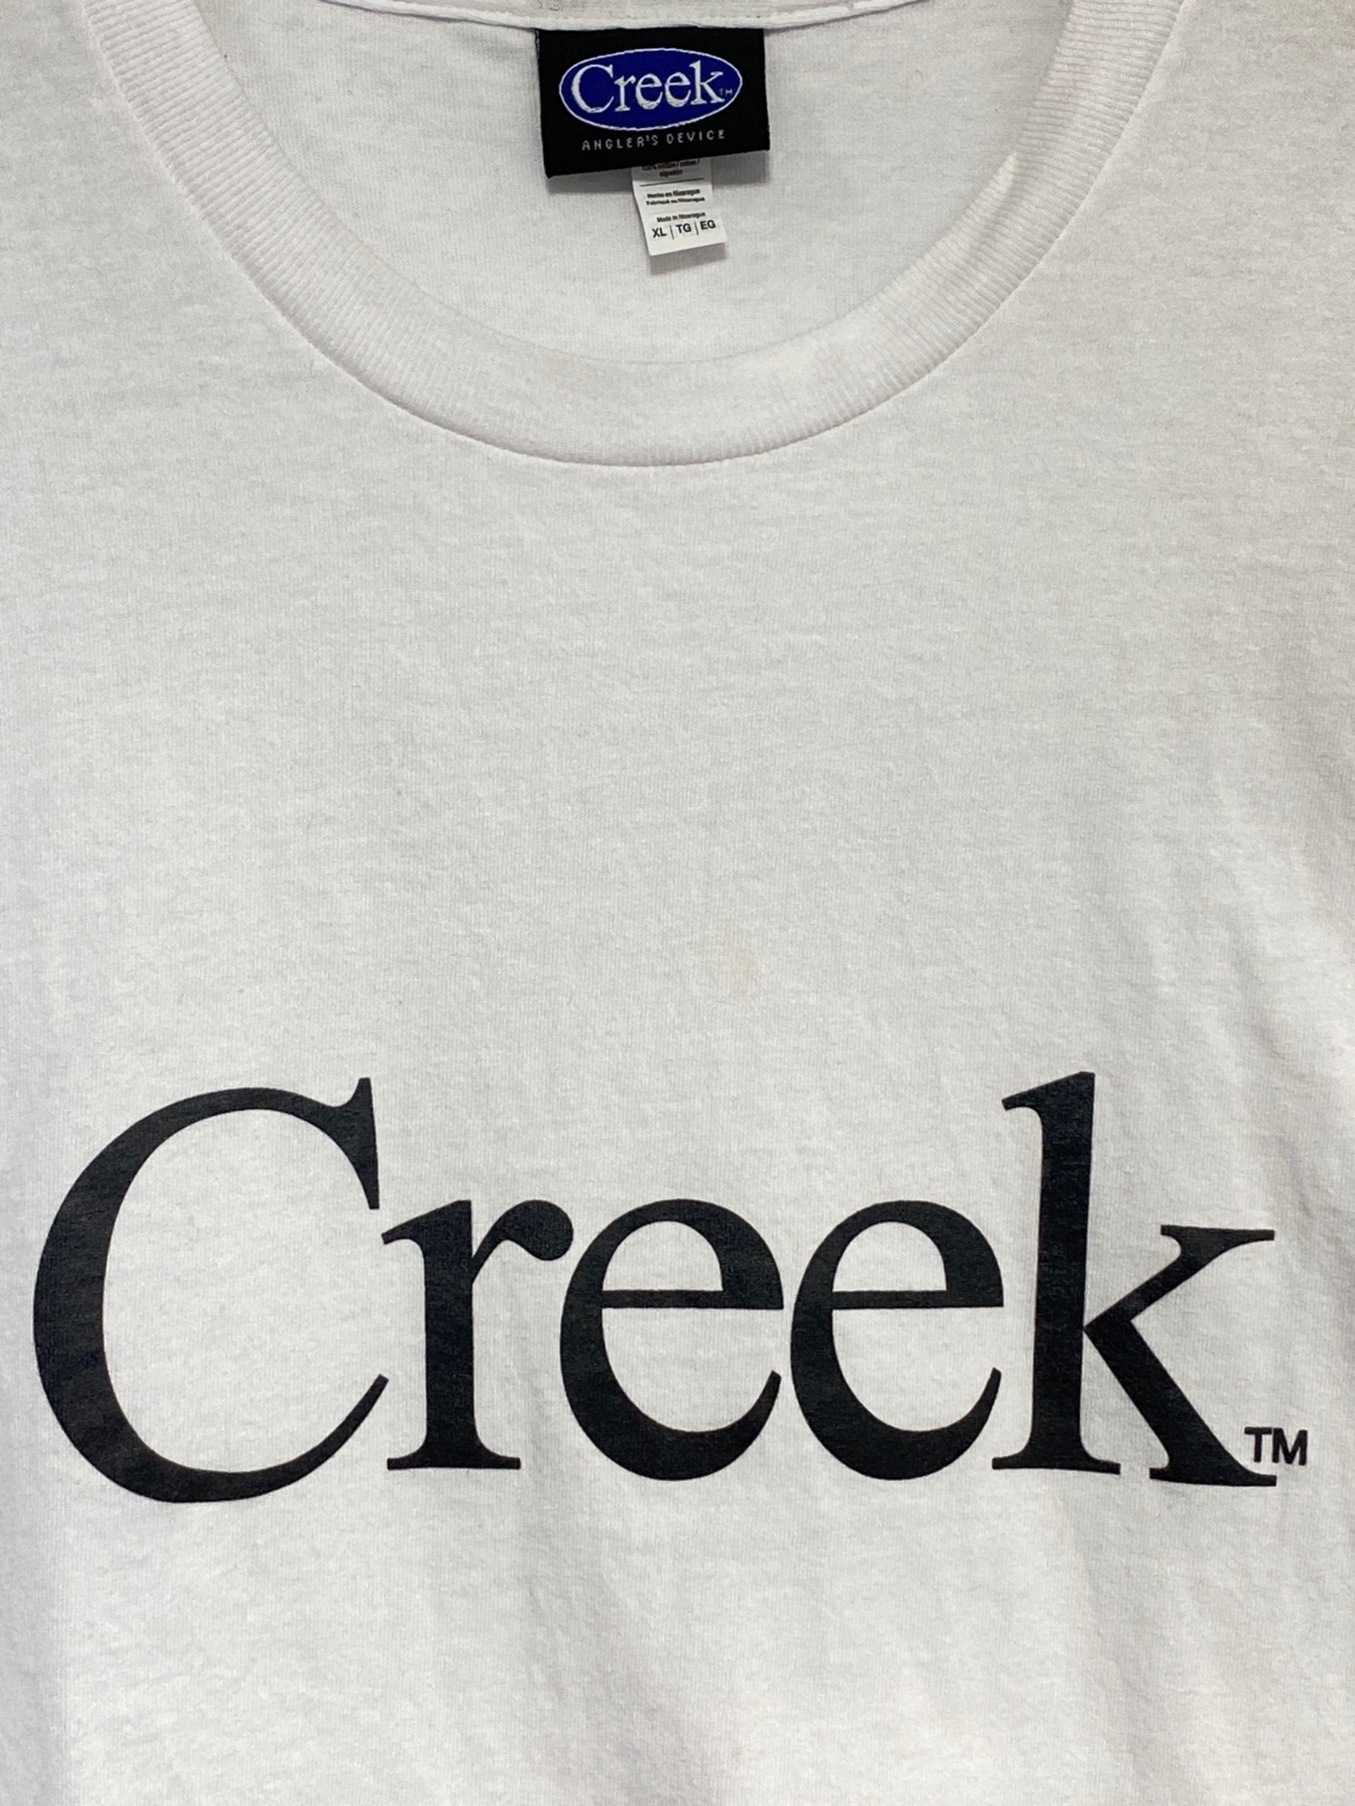 creek angler's device Tシャツ クリーク